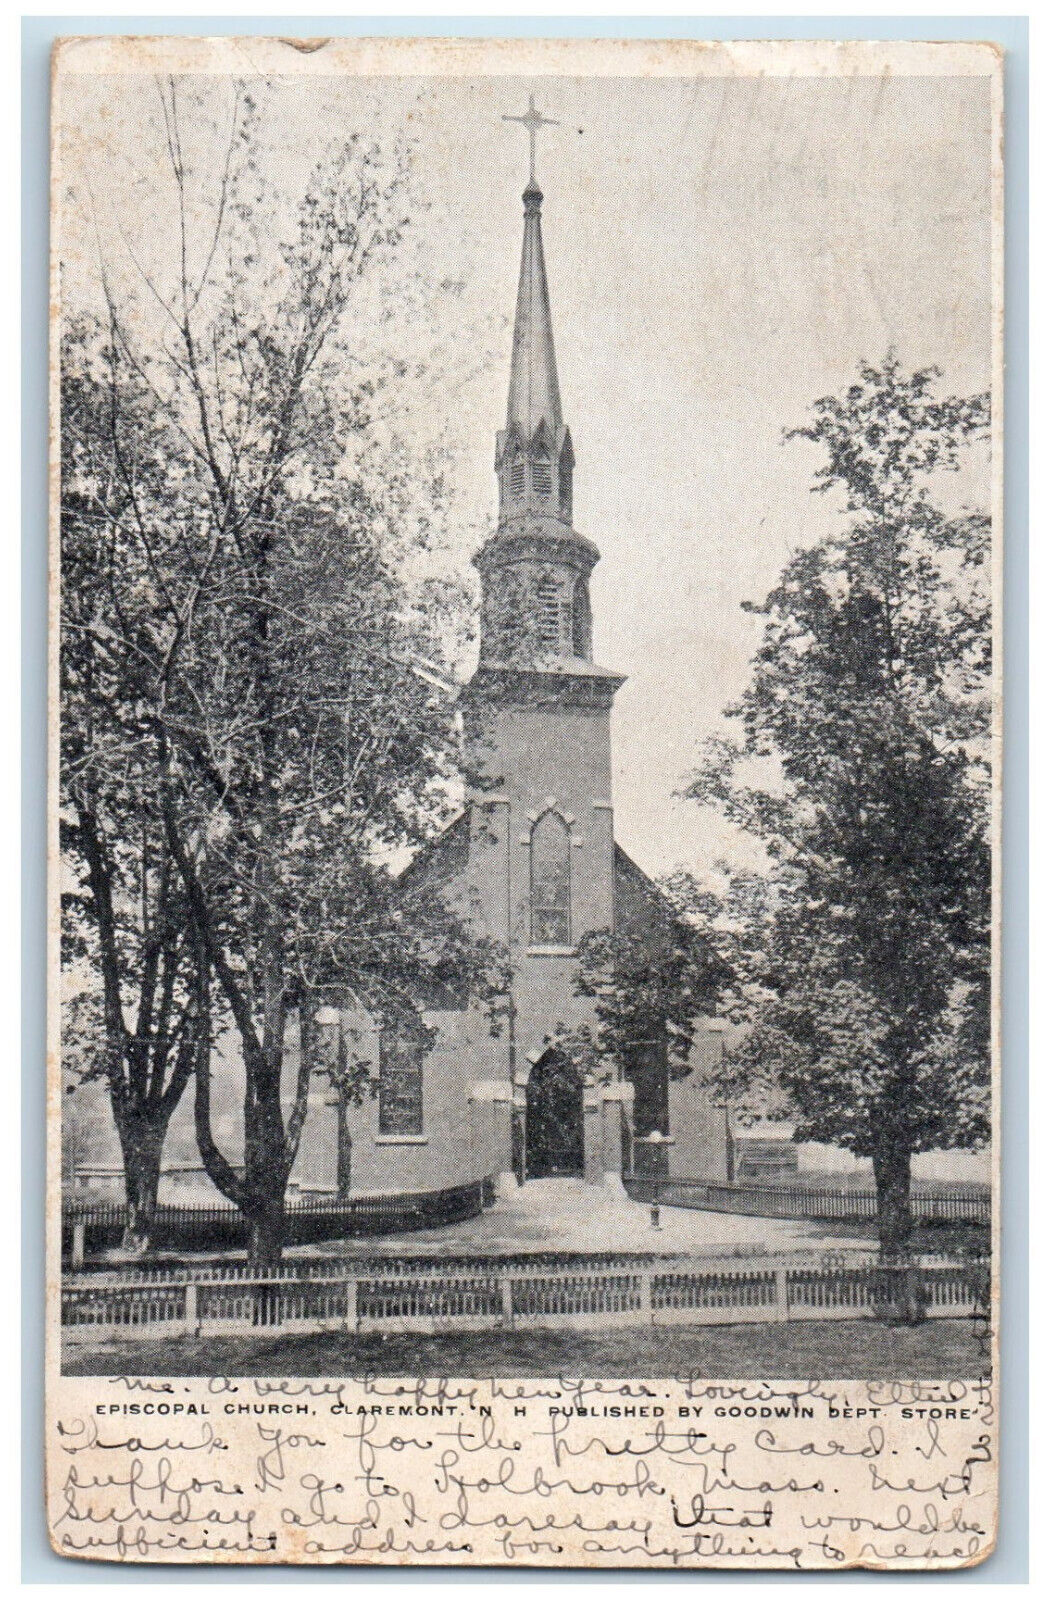 1906 Episcopal Church Claremont New Hampshire NH Goodwin Dept Store Postcard